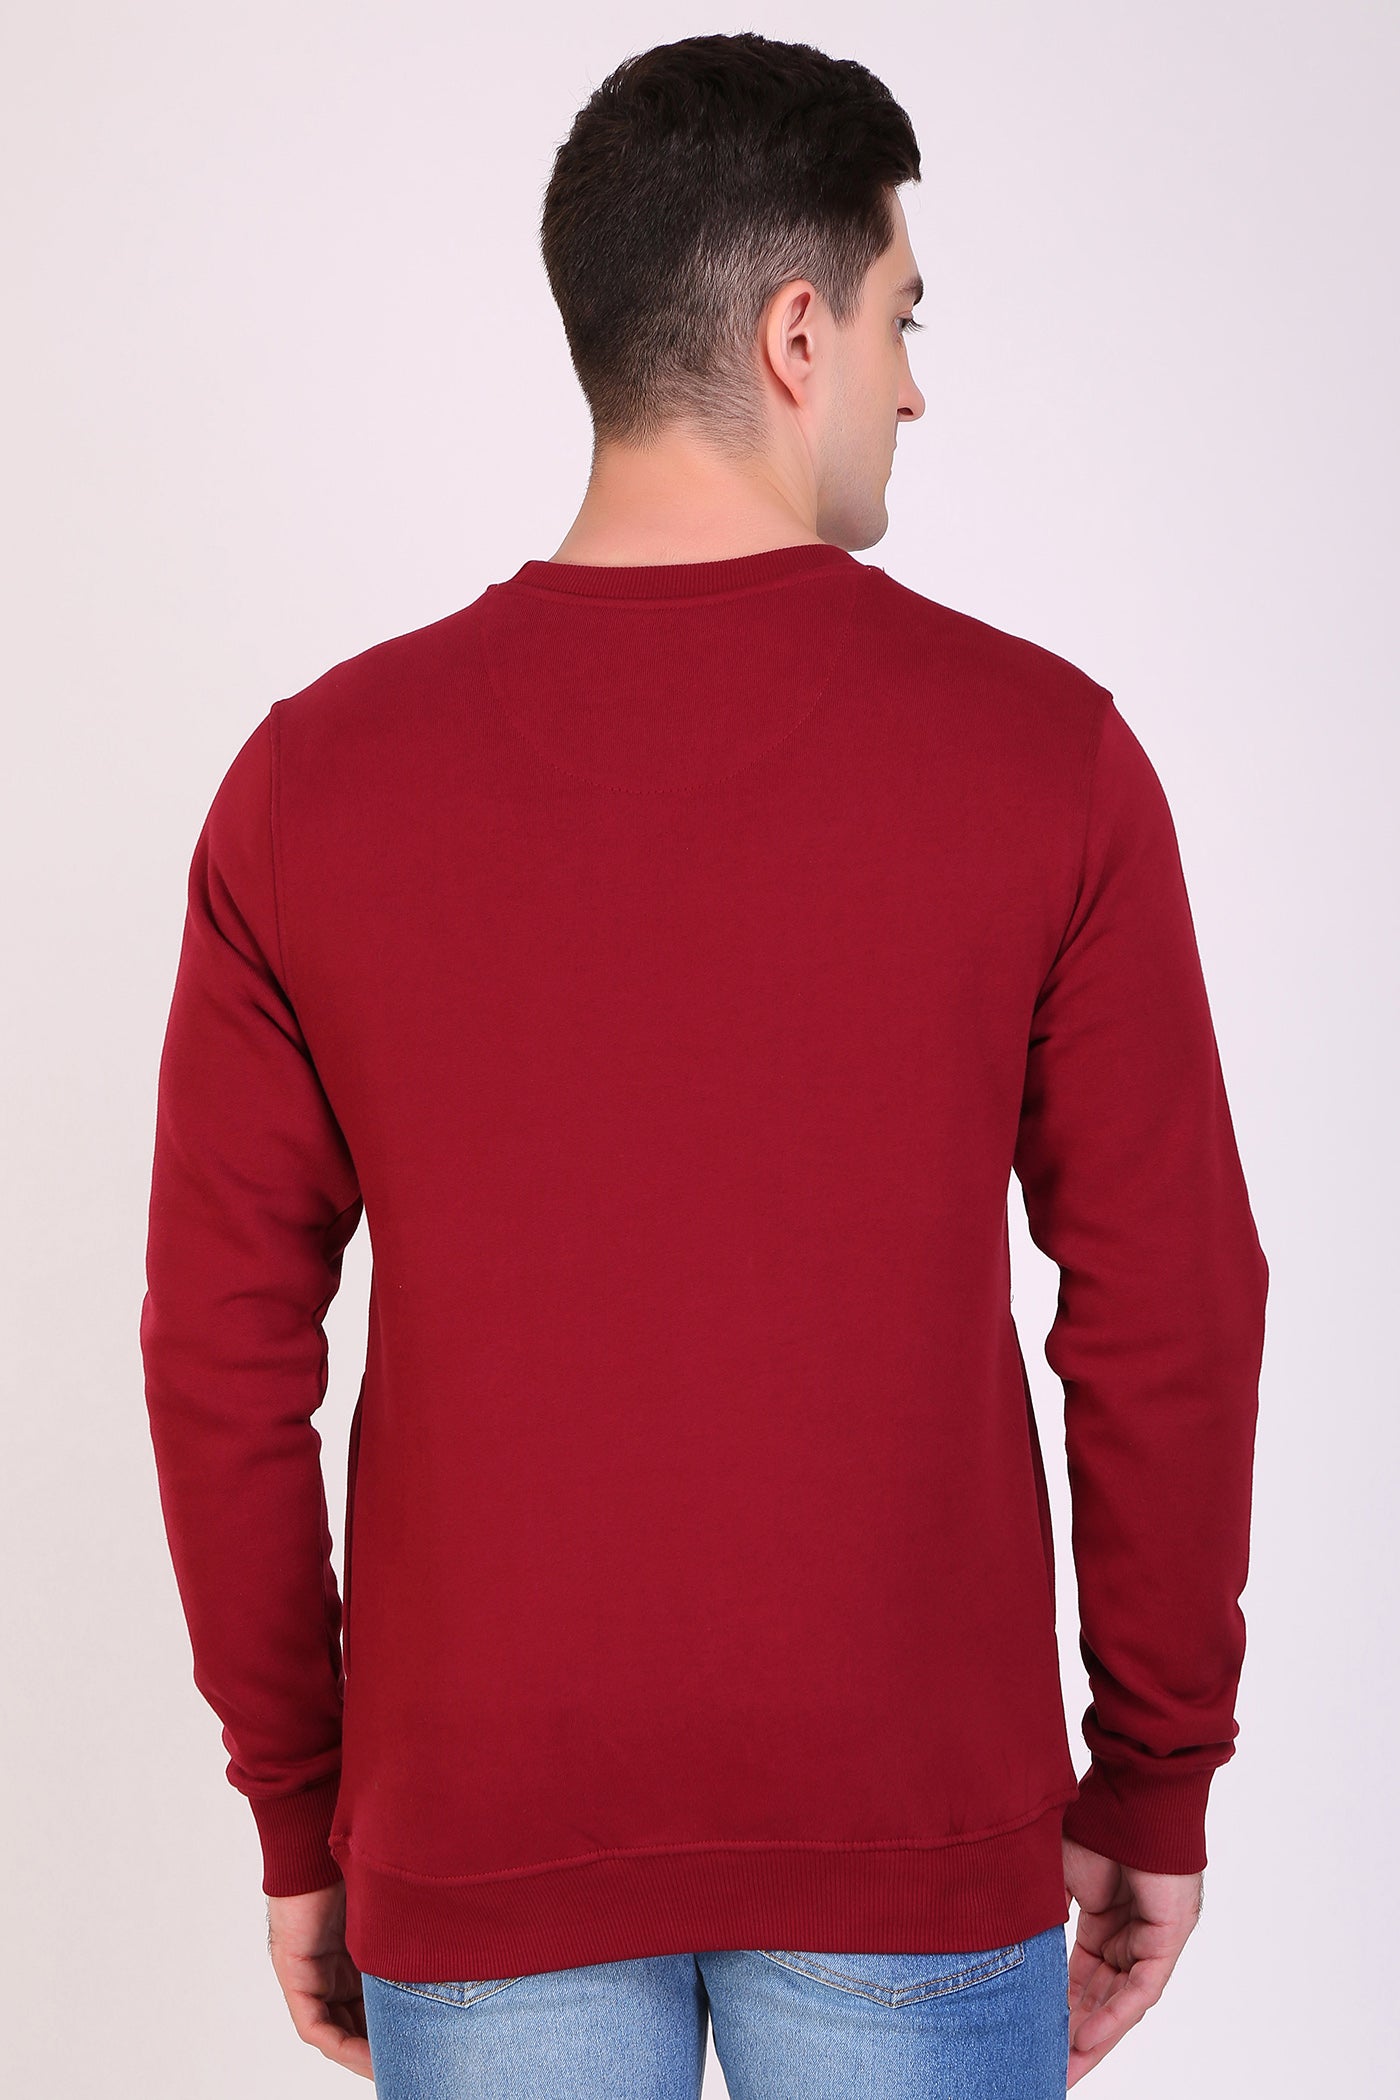 HiFlyers Full Sleeve Printed Men Sweatshirt-Maroon